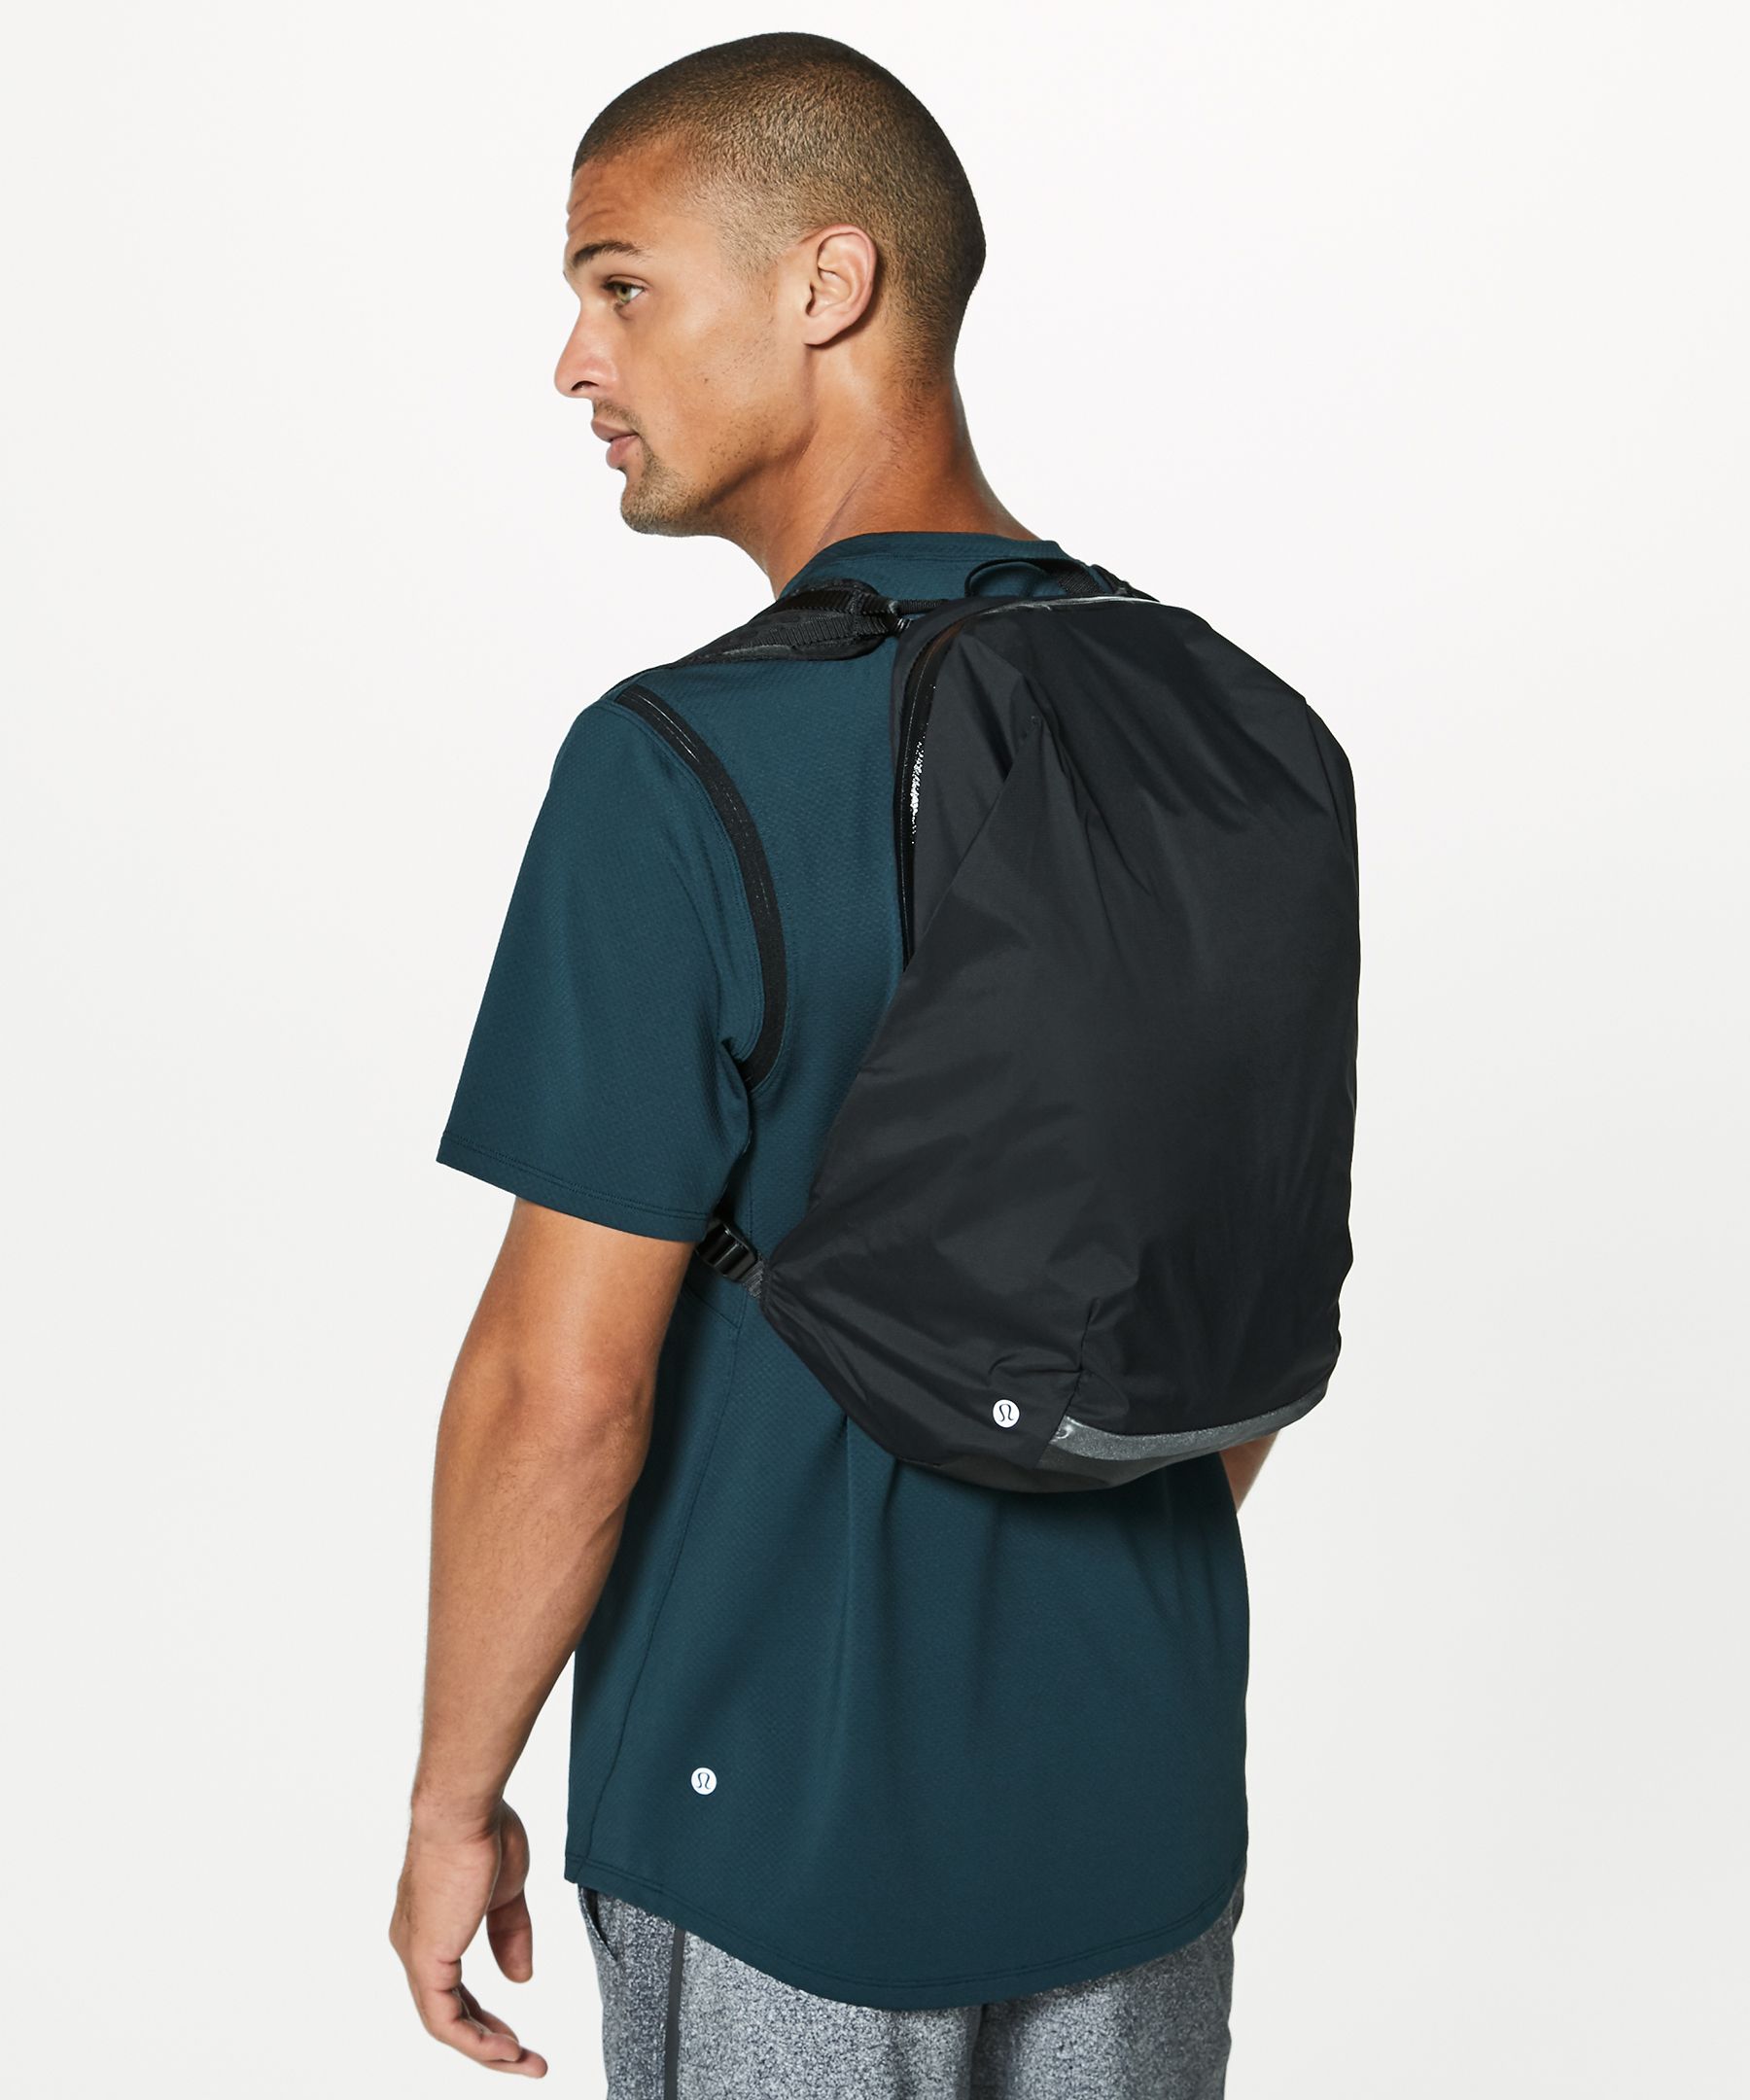 lululemon surge run backpack ii review